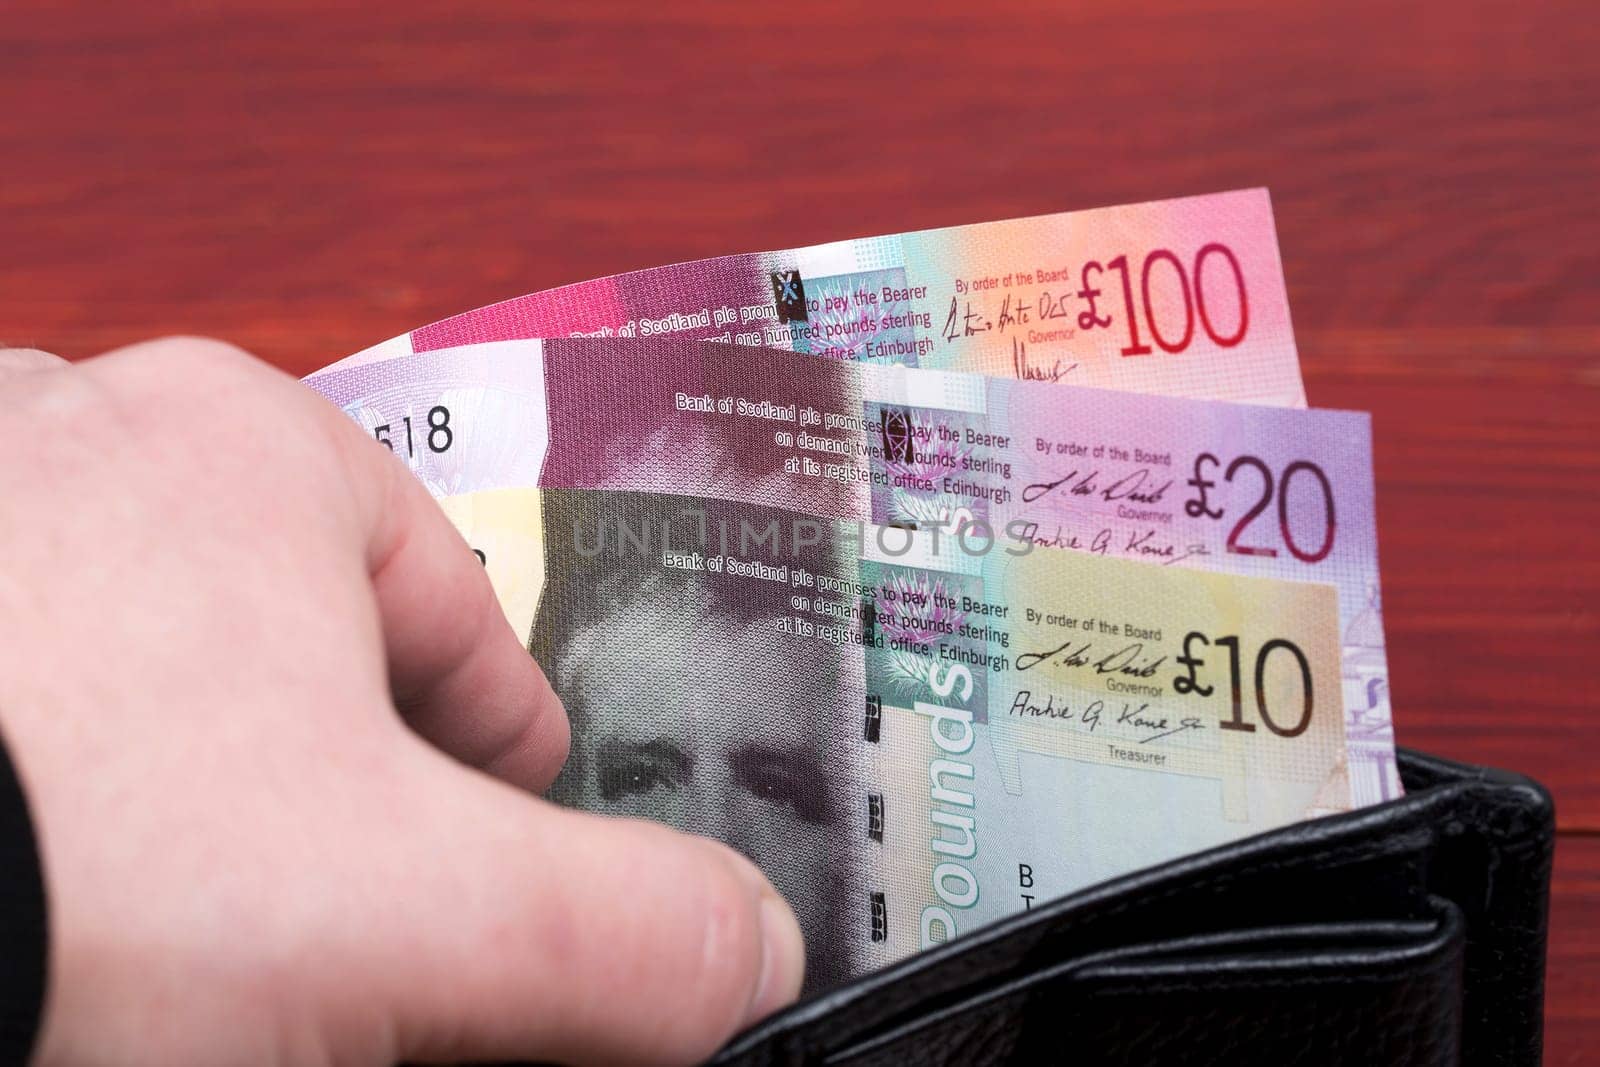 Scottish money - Pound in the black wallet by johan10